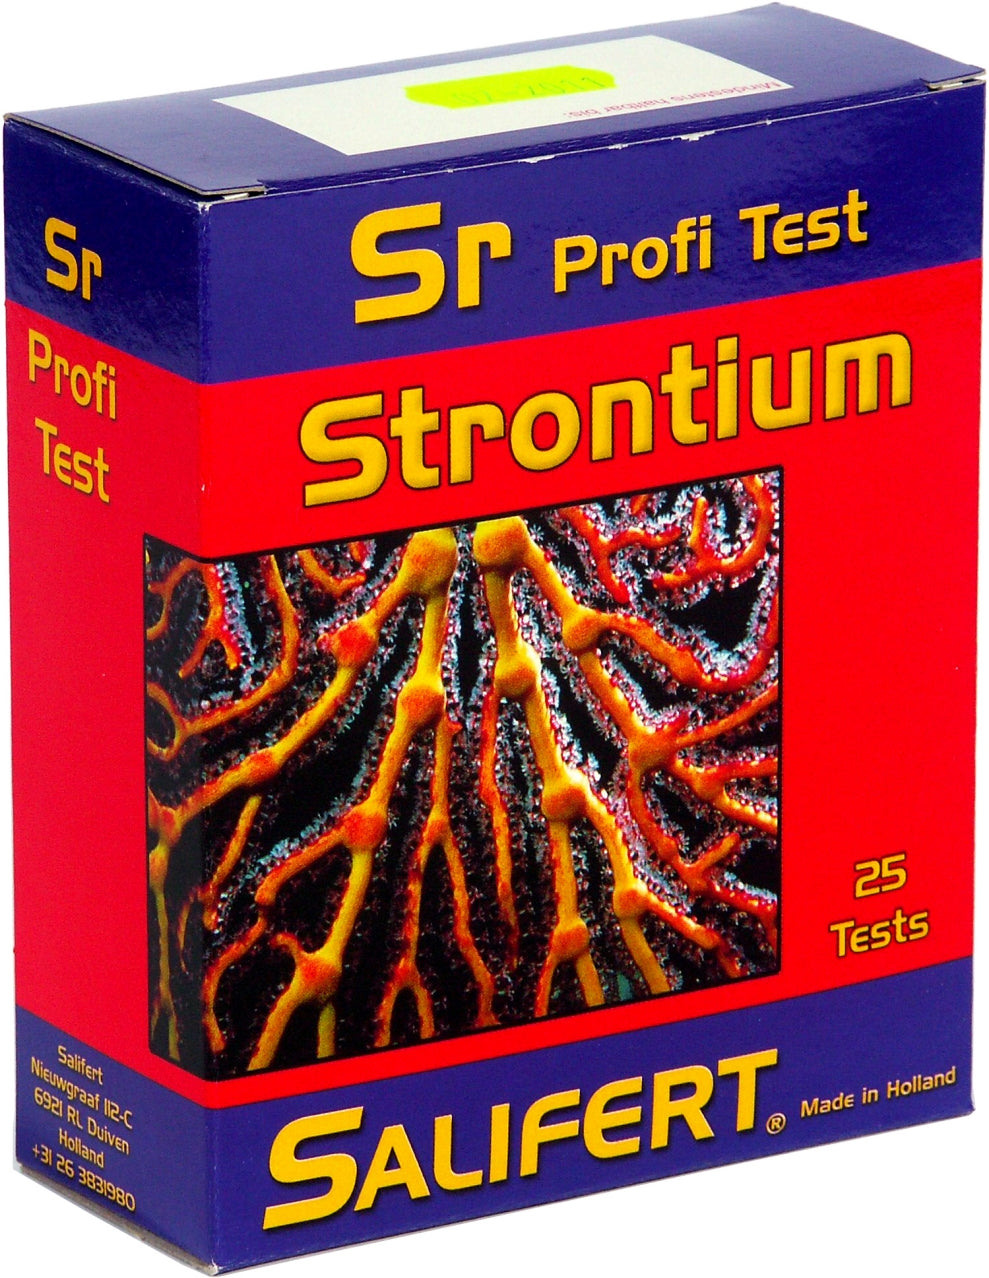 Salifert Strontium Sr Profi Test available at Coral Passion in Essex